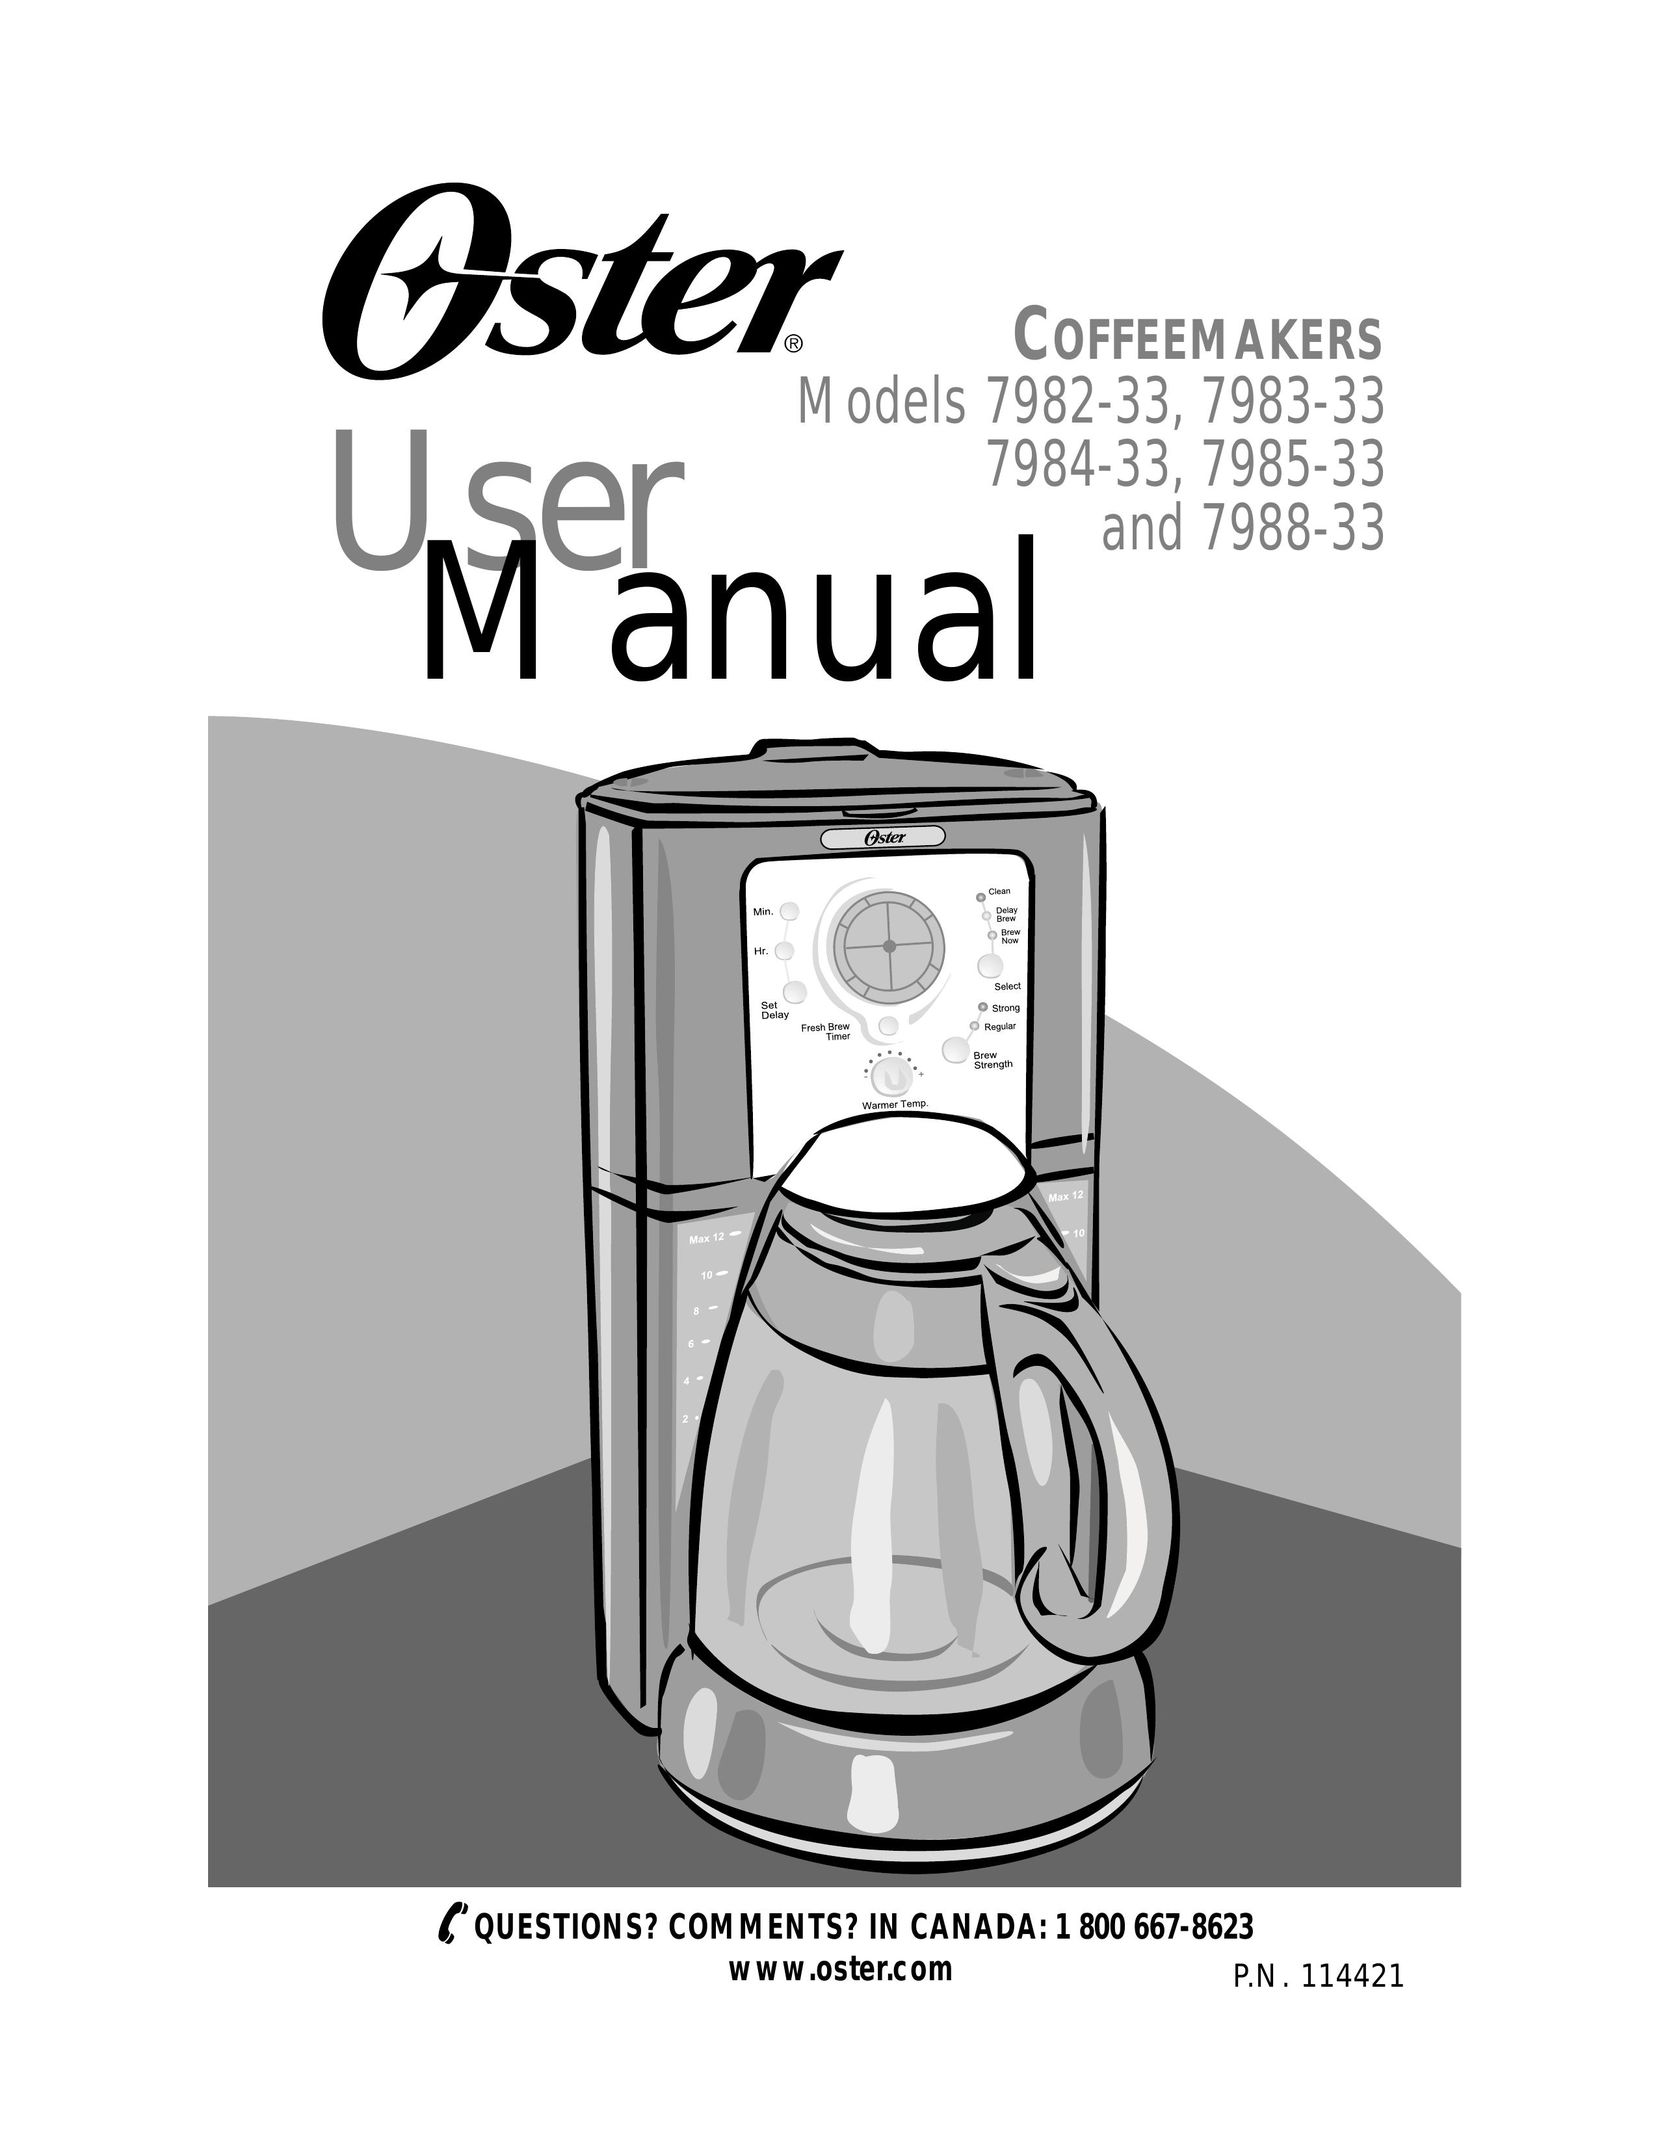 Mr. Coffee 7984-33 Coffeemaker User Manual